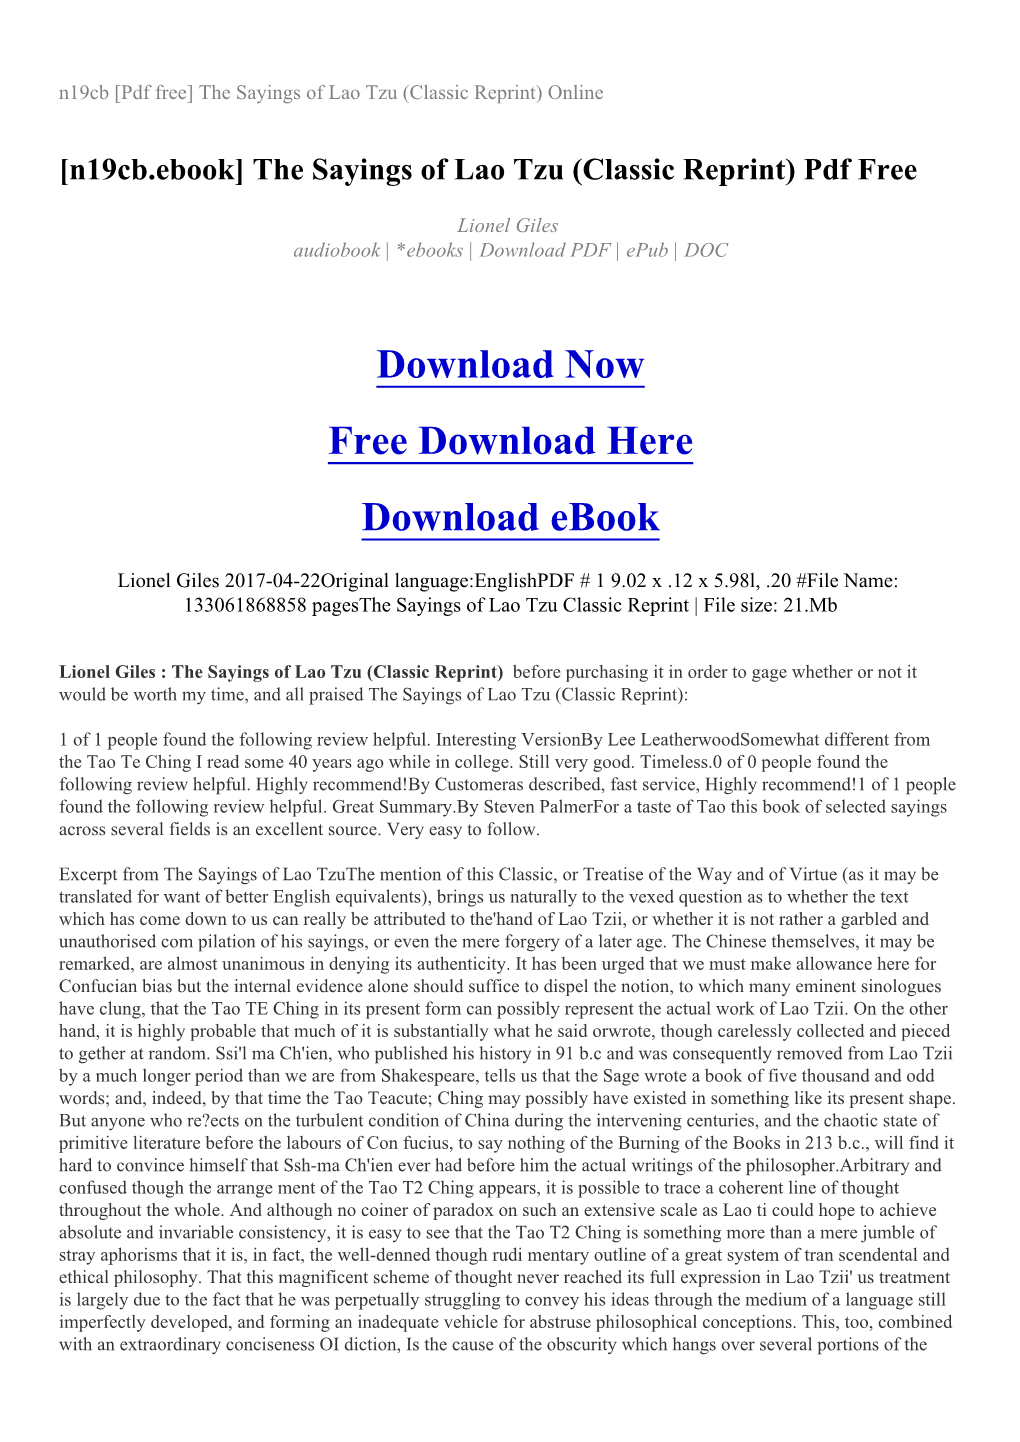 N19cb [Pdf Free] the Sayings of Lao Tzu (Classic Reprint) Online